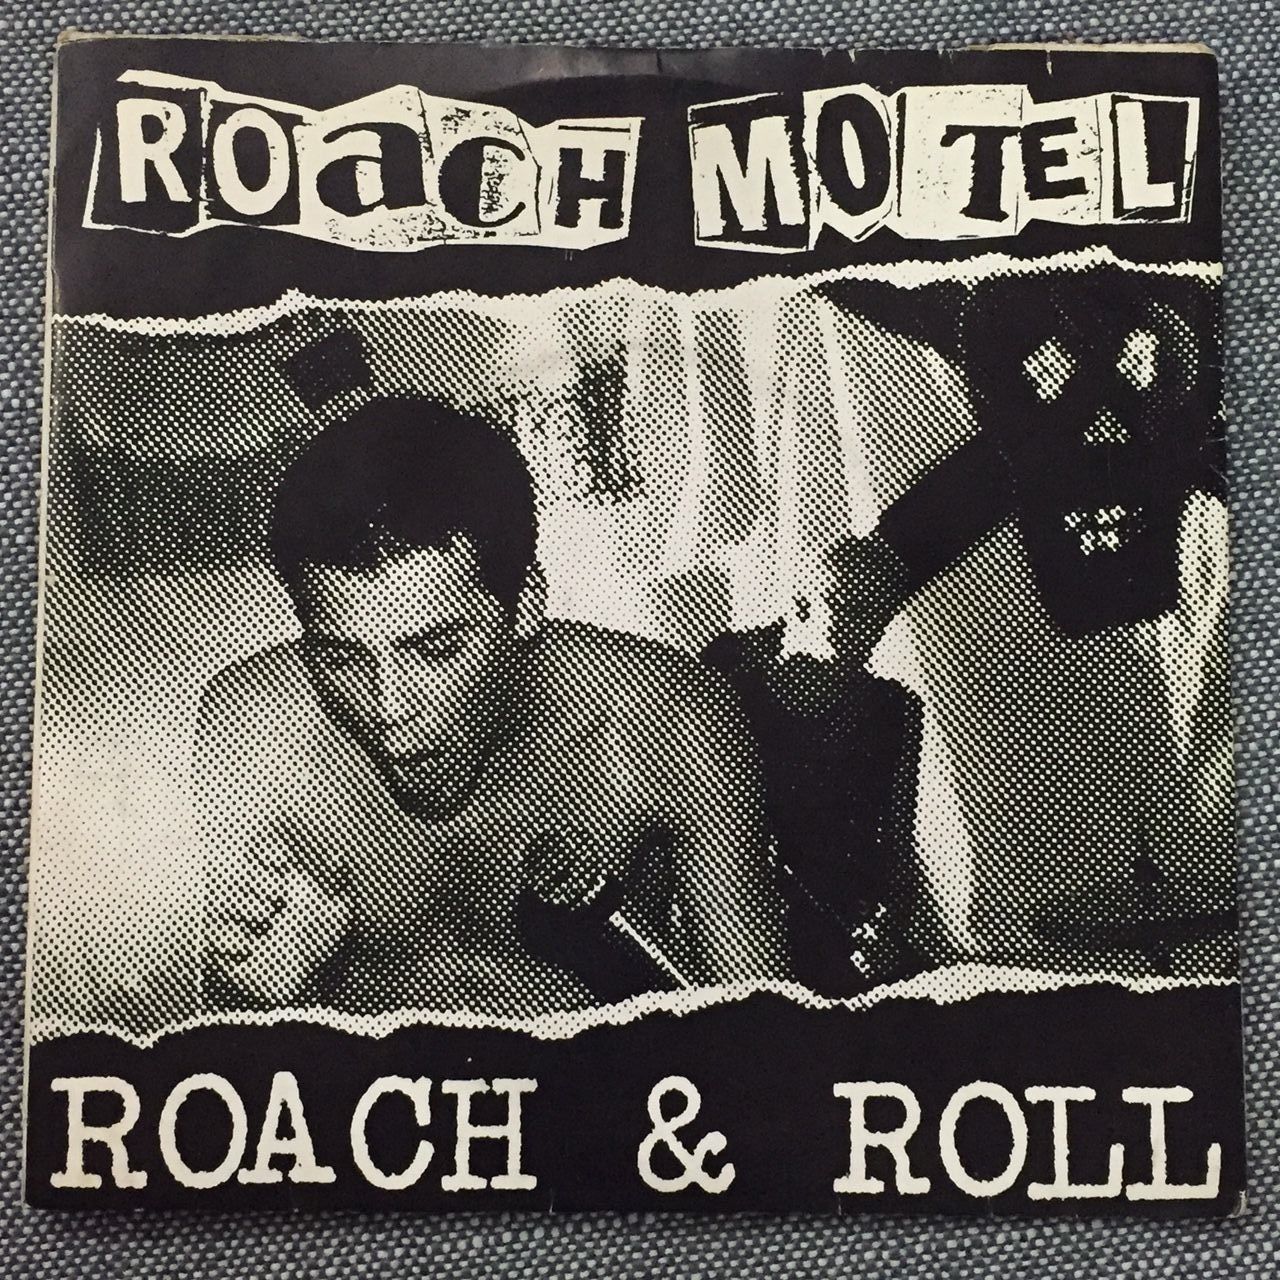 ROACH MOTEL-ROACH & ROLL 45 1982 PUNK KBD FLORIDA EAT SHEER SMEGMA FUTURISK RARE